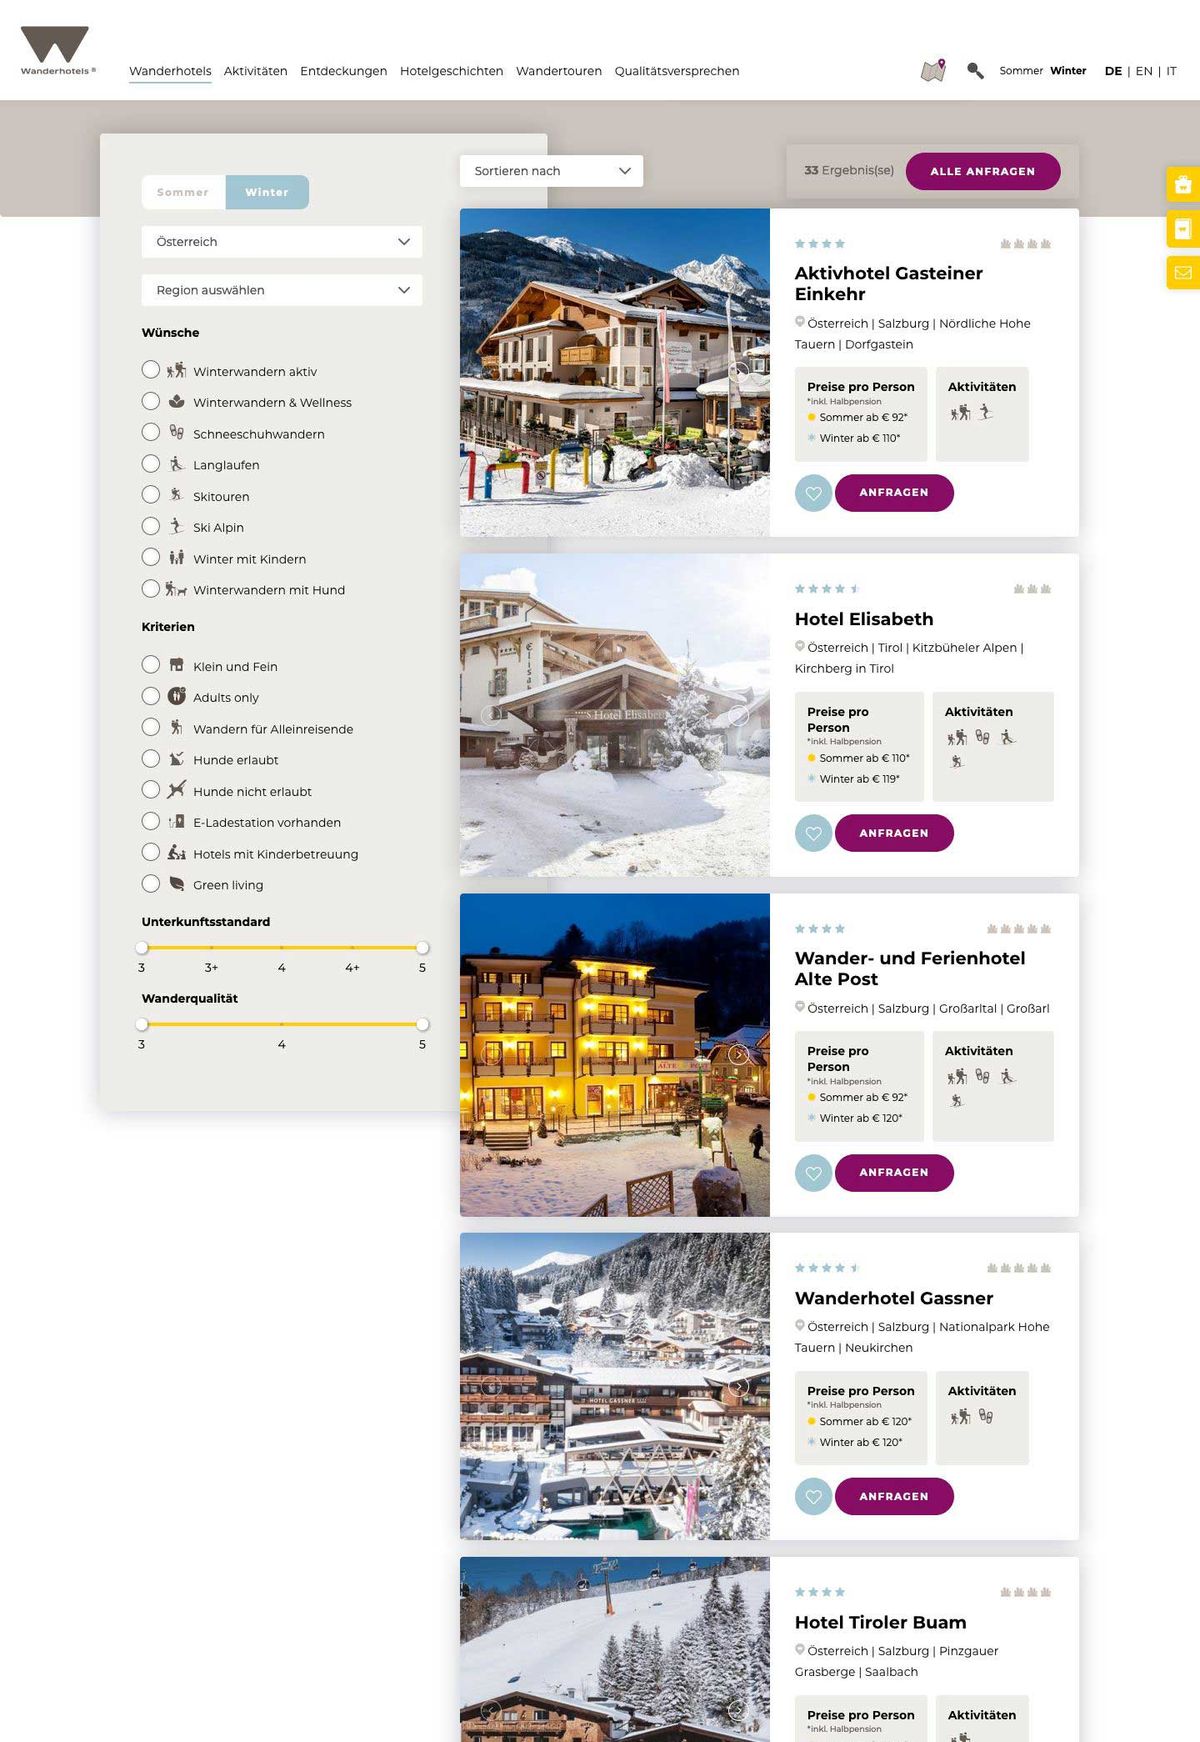 Urlaub in den besten Wanderhotels der Alpen - Website